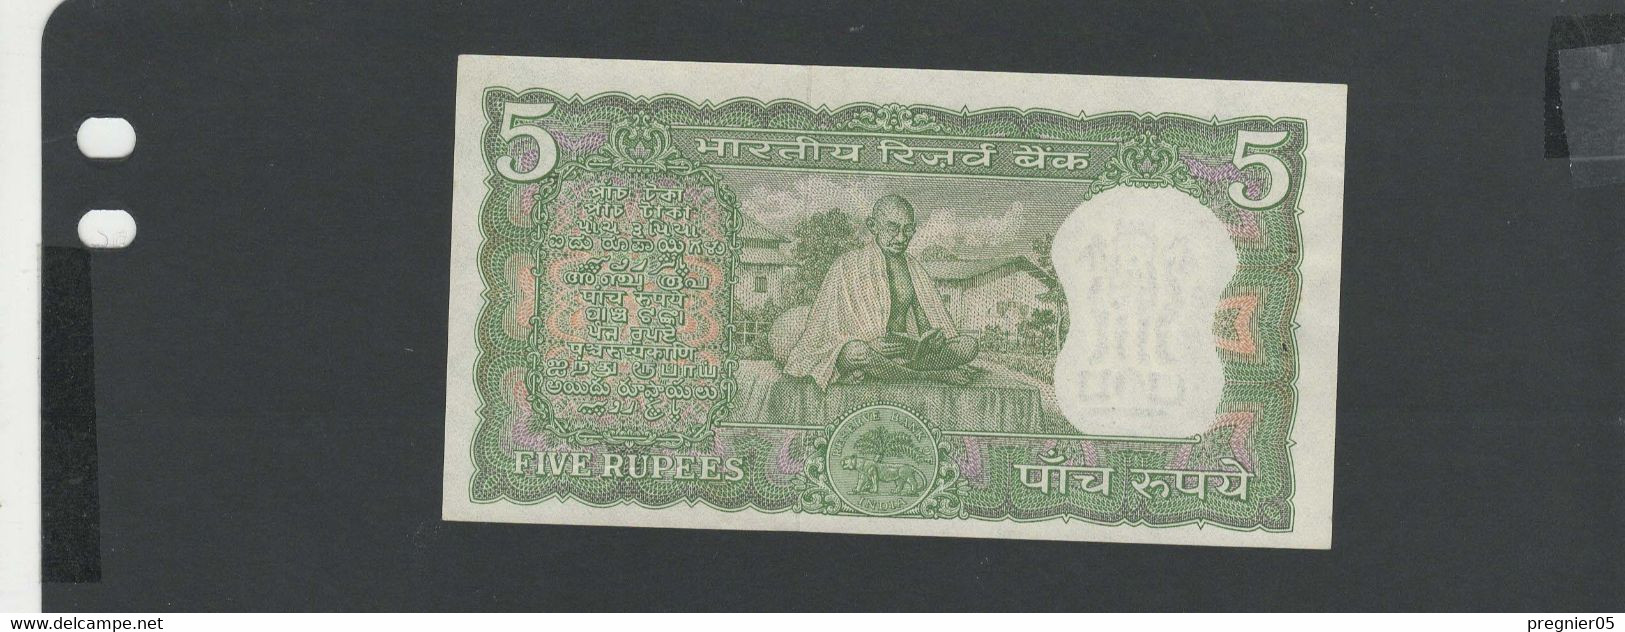 INDE - Billet 5 Roupies 1969/70 SPL/AU Pick-068b - Inde